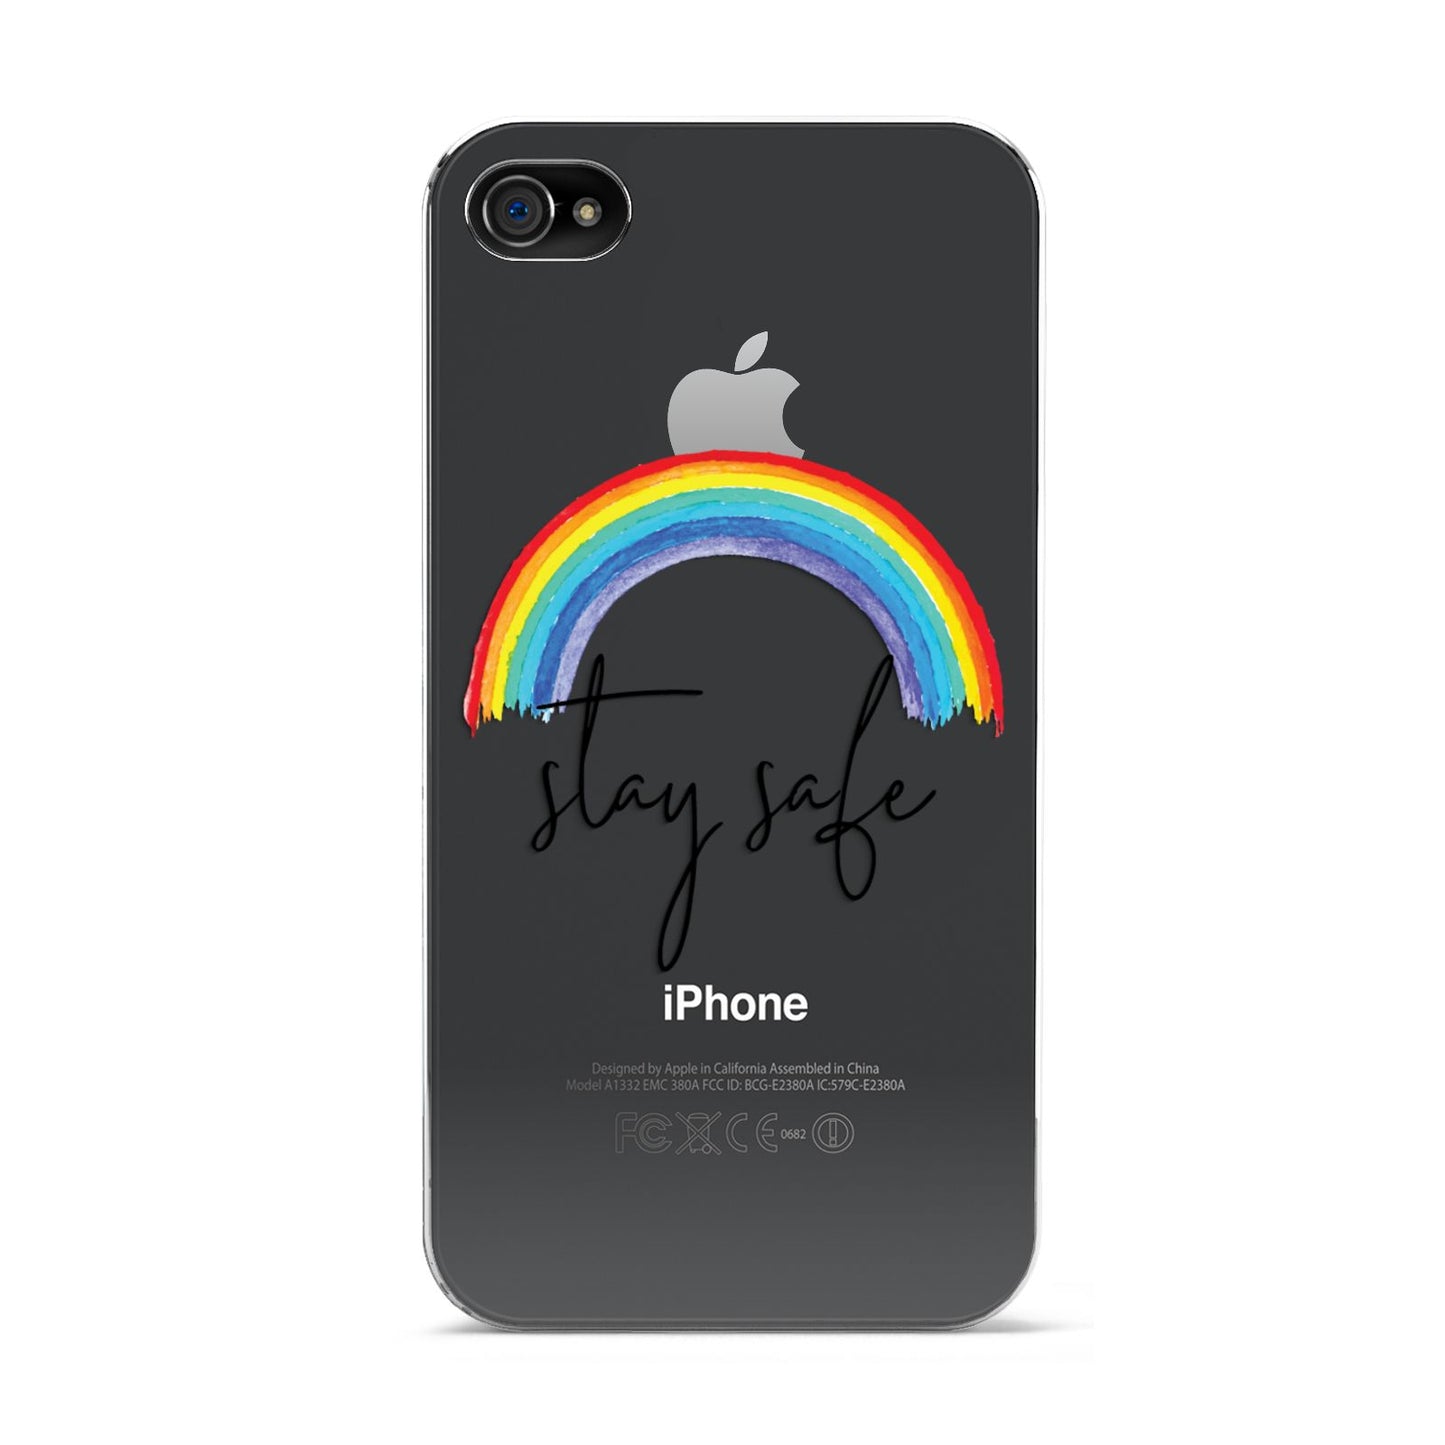 Stay Safe Rainbow Apple iPhone 4s Case